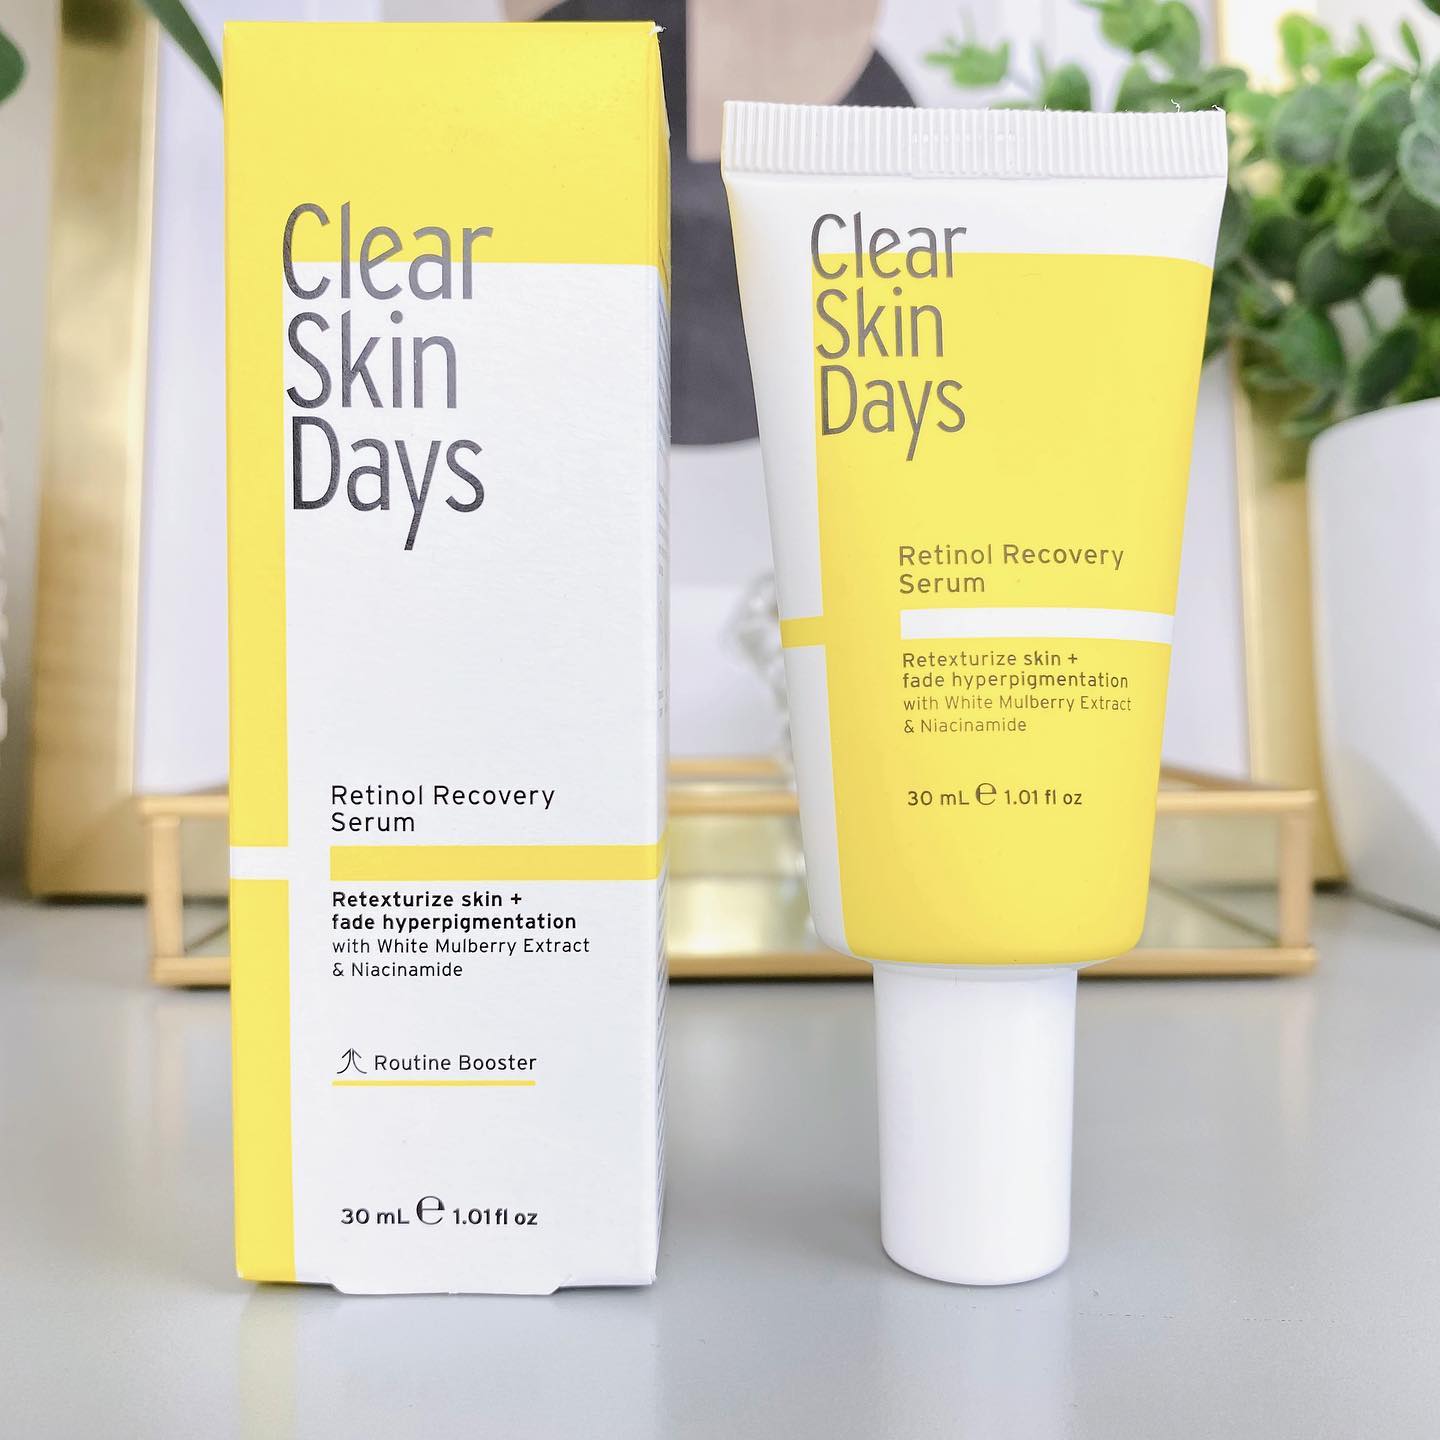 Clear Skin Days Retinol Recovery Serum Review